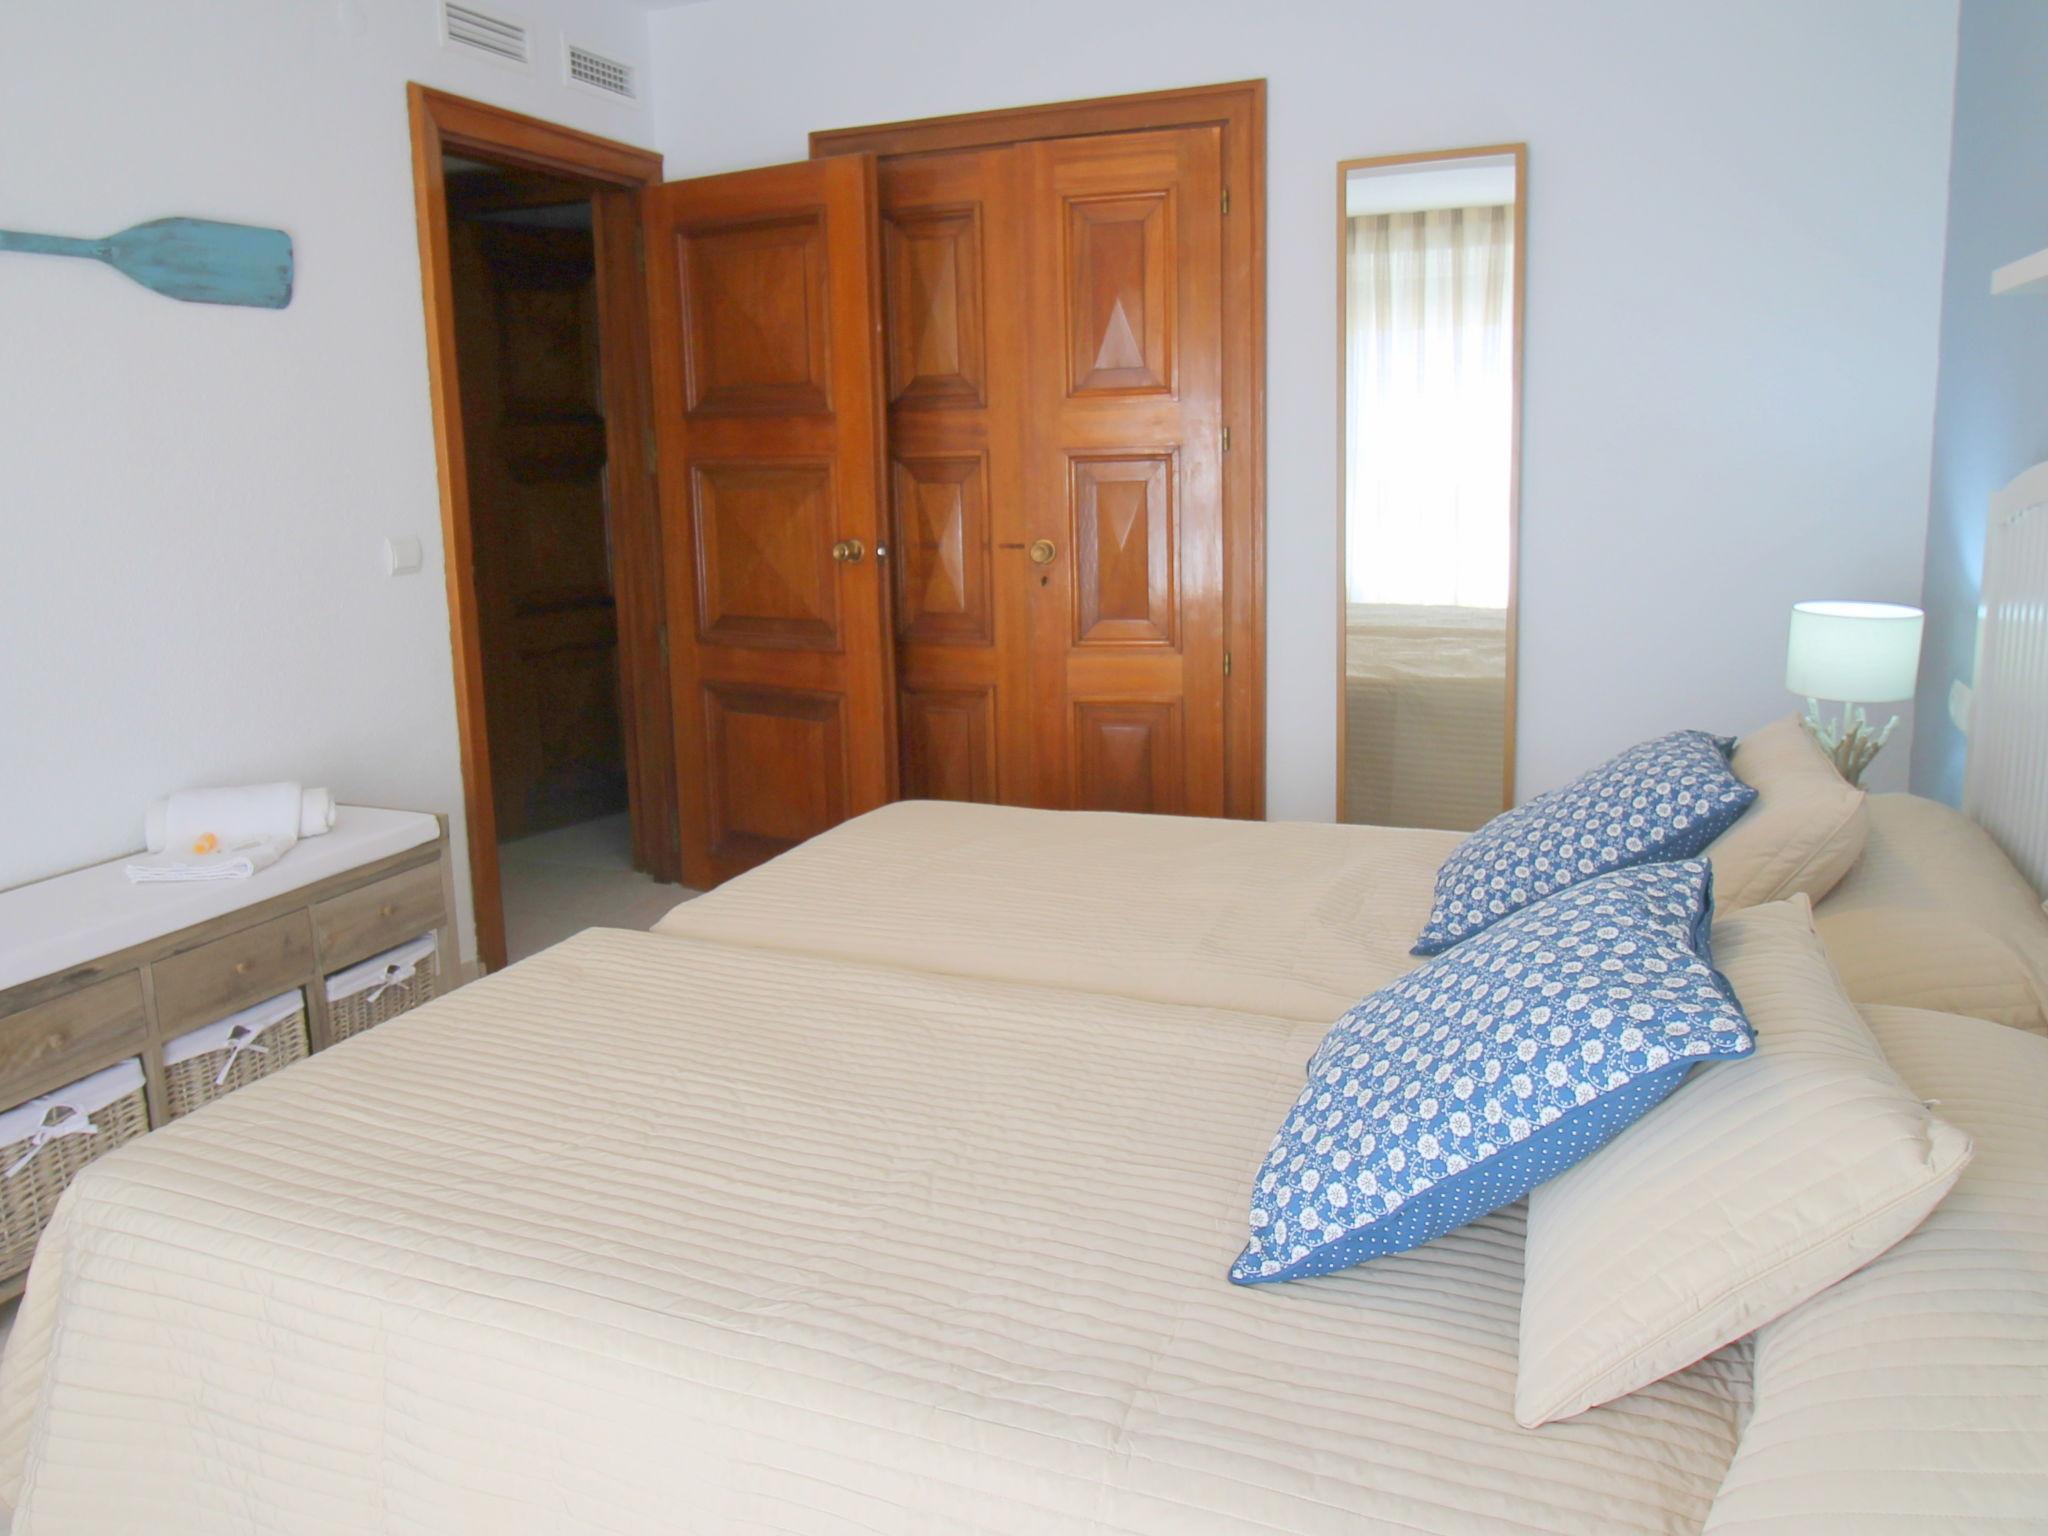 Photo 14 - Appartement de 3 chambres à Benidorm avec vues à la mer